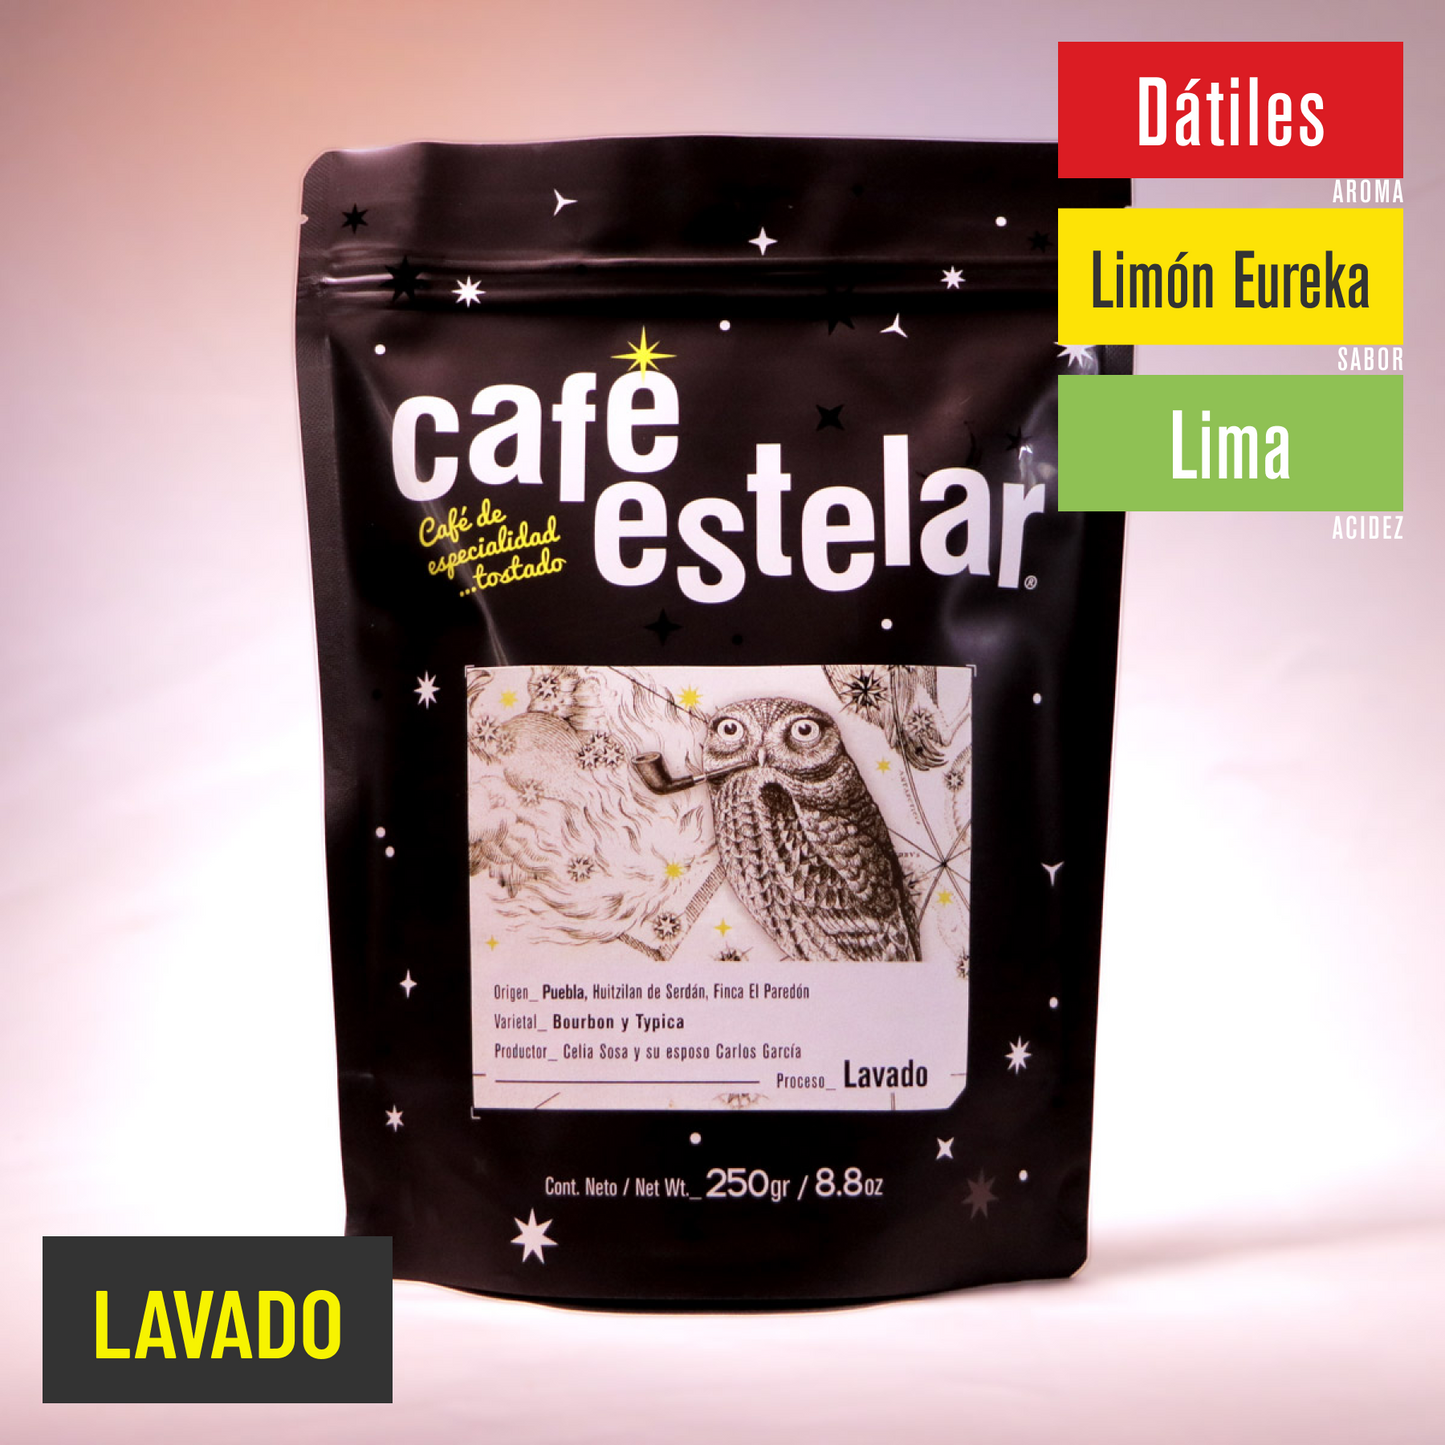 Café Puebla - Huitzilán de Serdán - Lavado